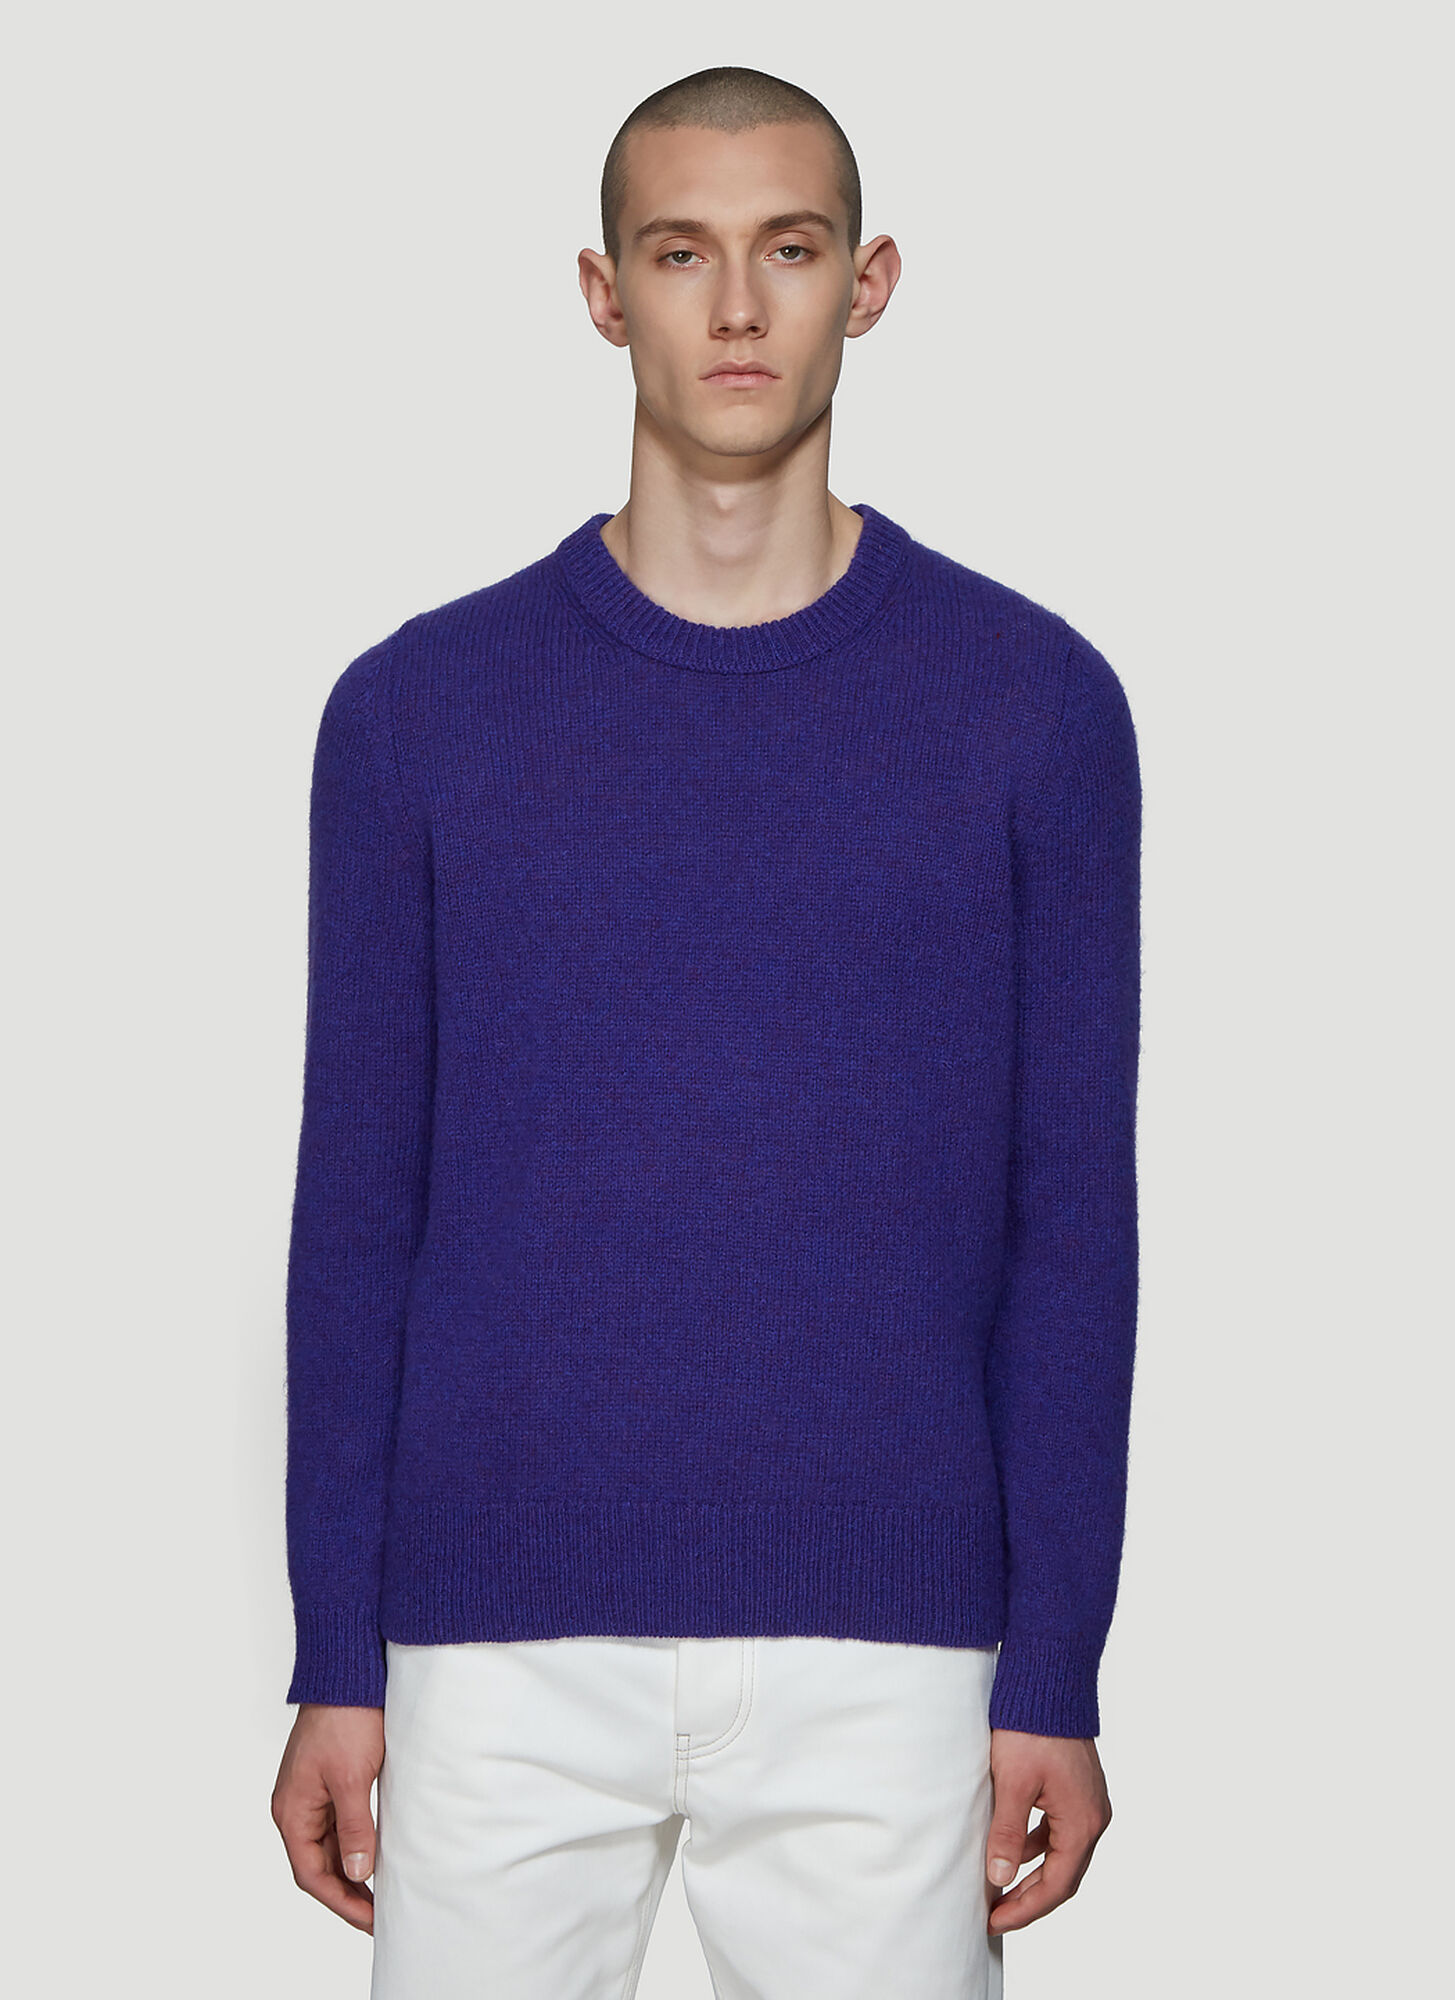 Acne Studios Kai Wool Crewneck Sweater in Purple size L | The Fashionisto